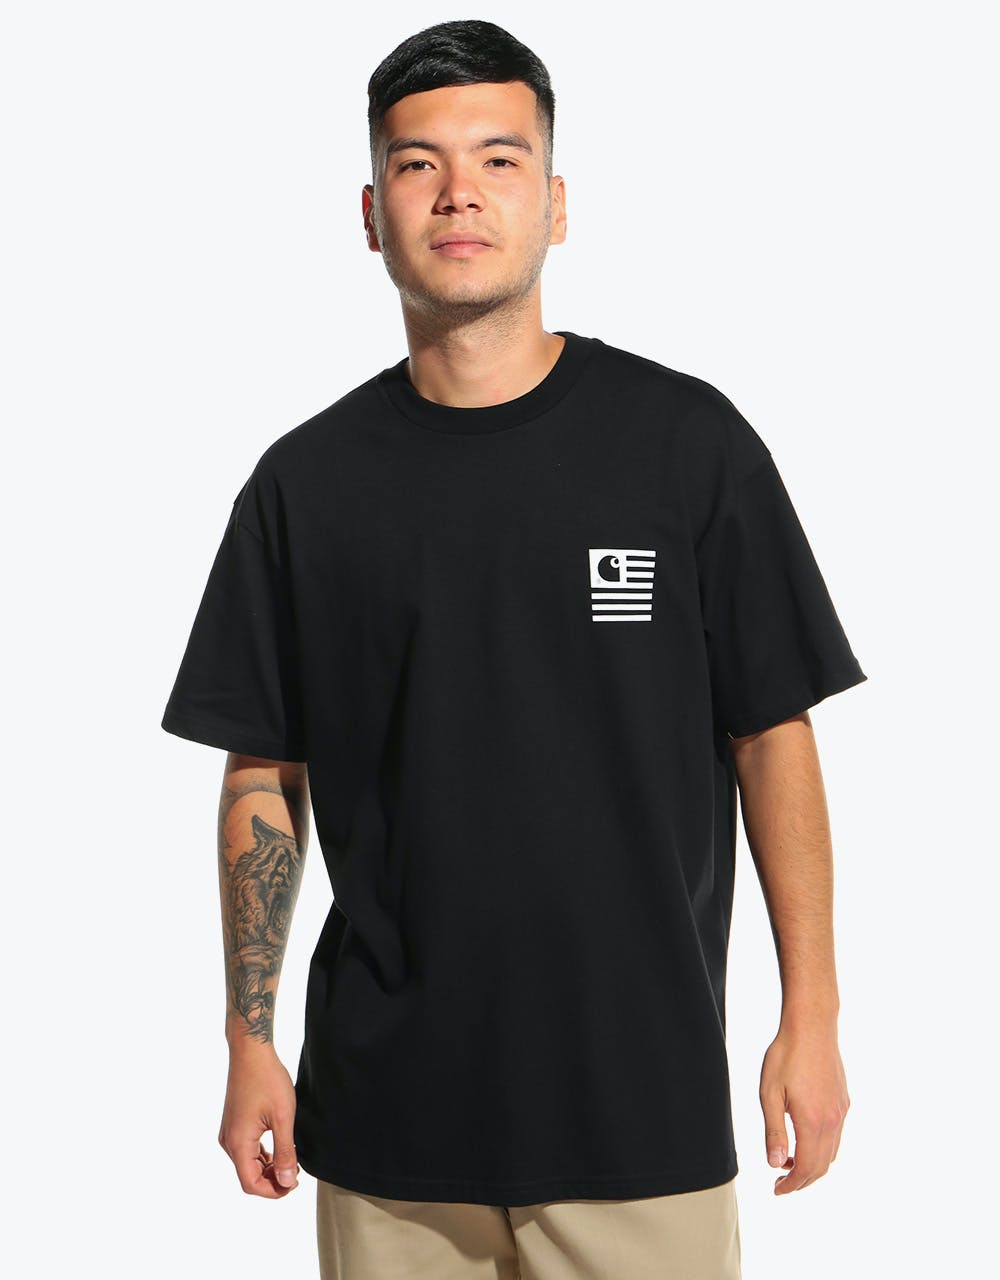 Carhartt WIP S/S Waving State Flag T-Shirt - Black/White